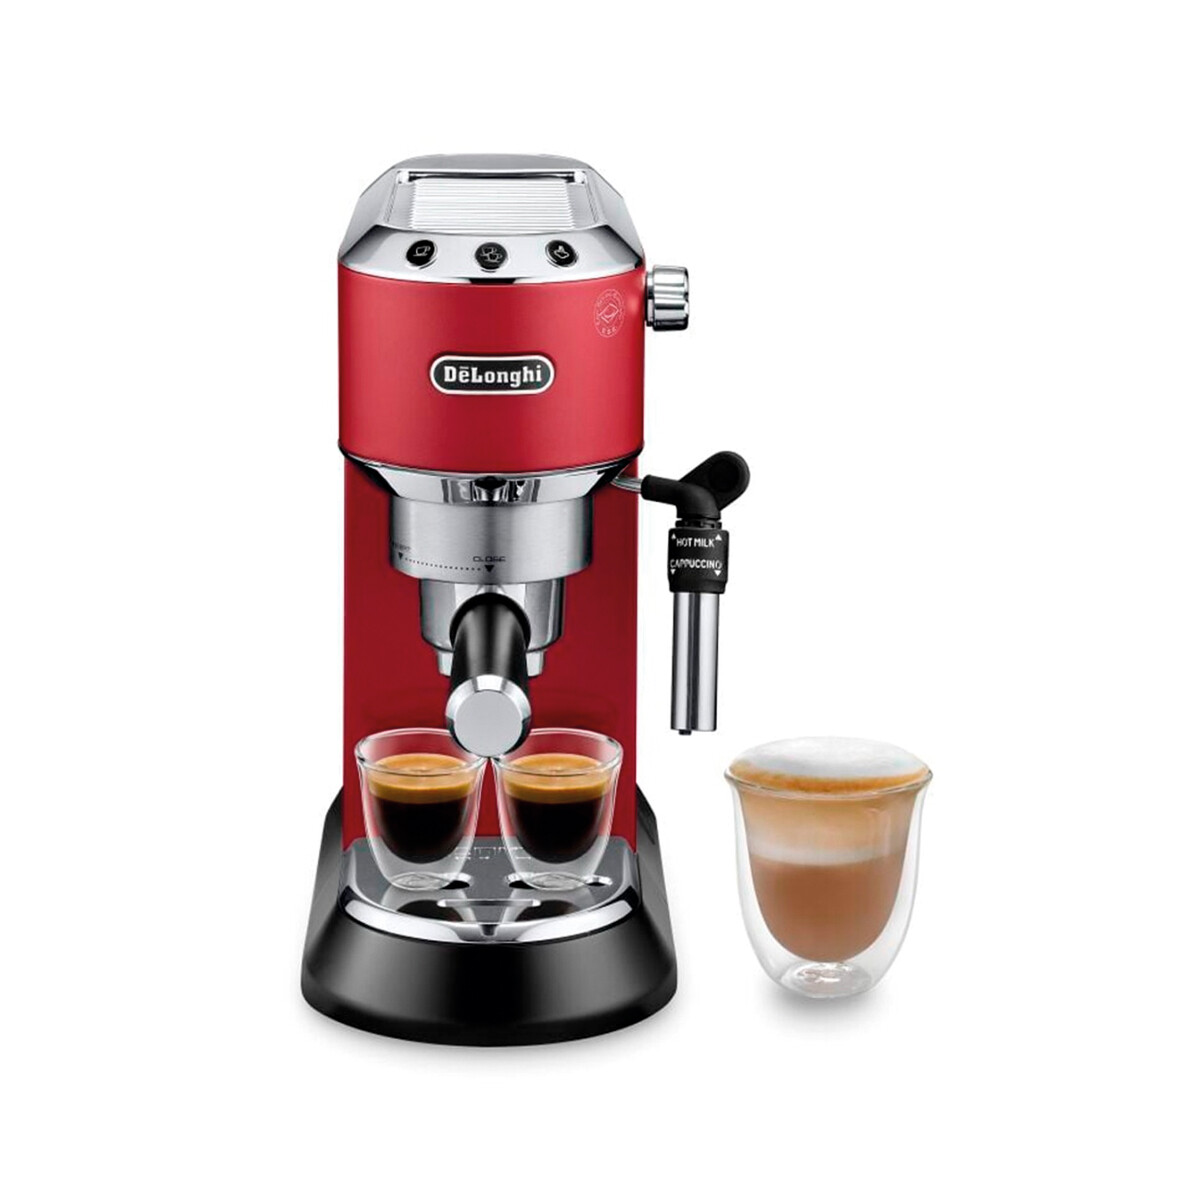 Cafetera Espresso DeLonghi M685 - Roja 